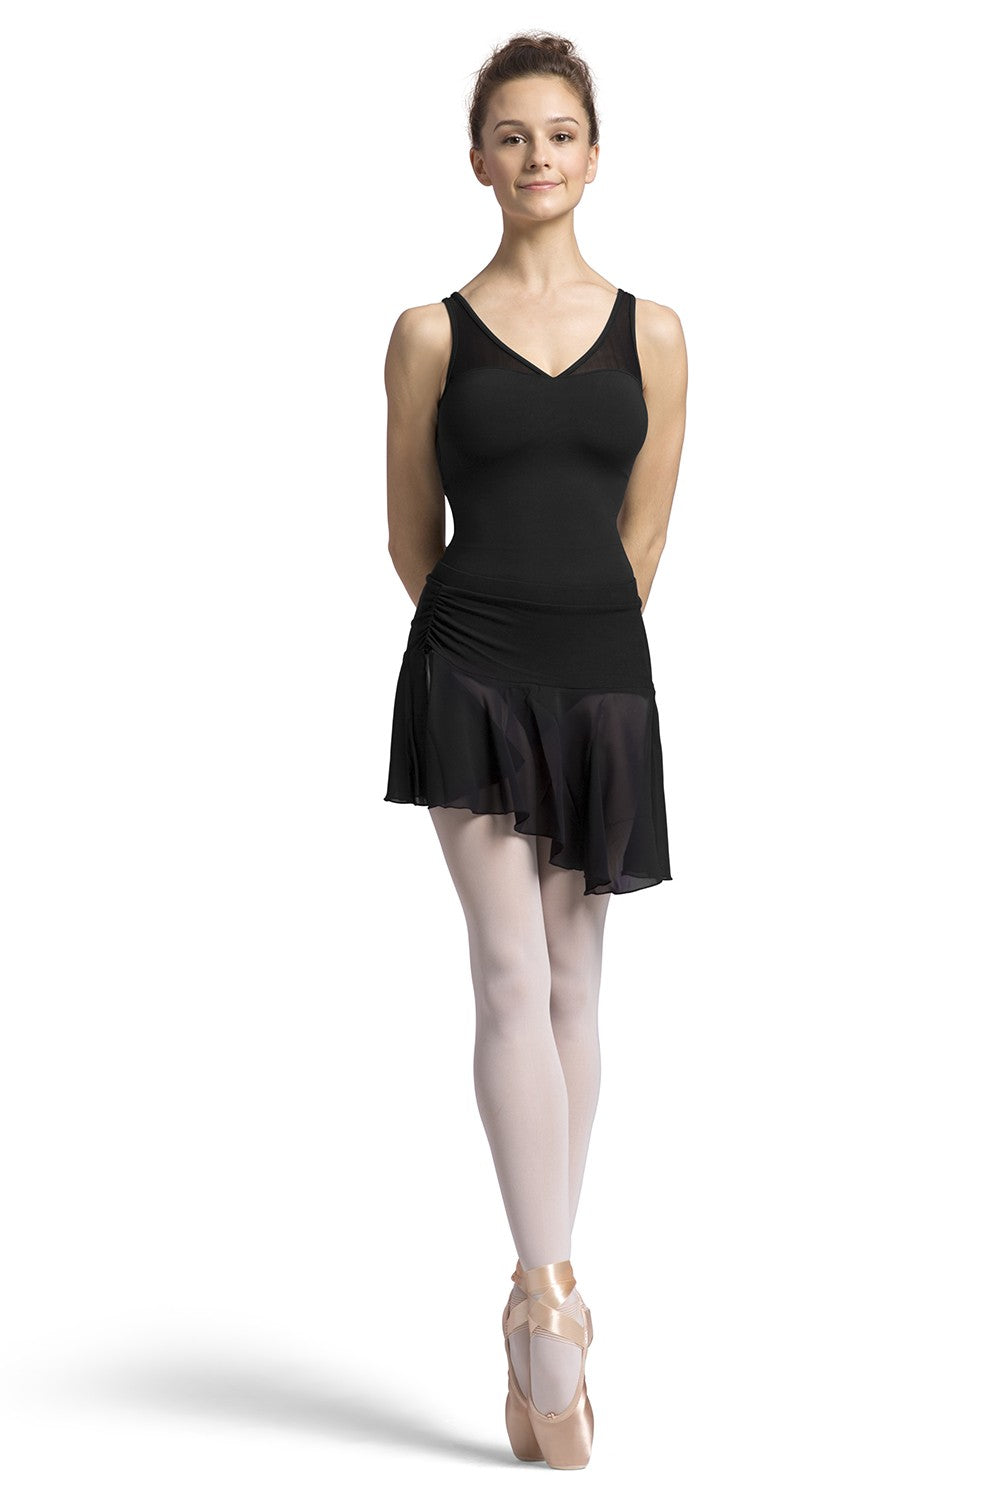 Bloch Mireya Skirt R8911 Freestyle Dancewear 